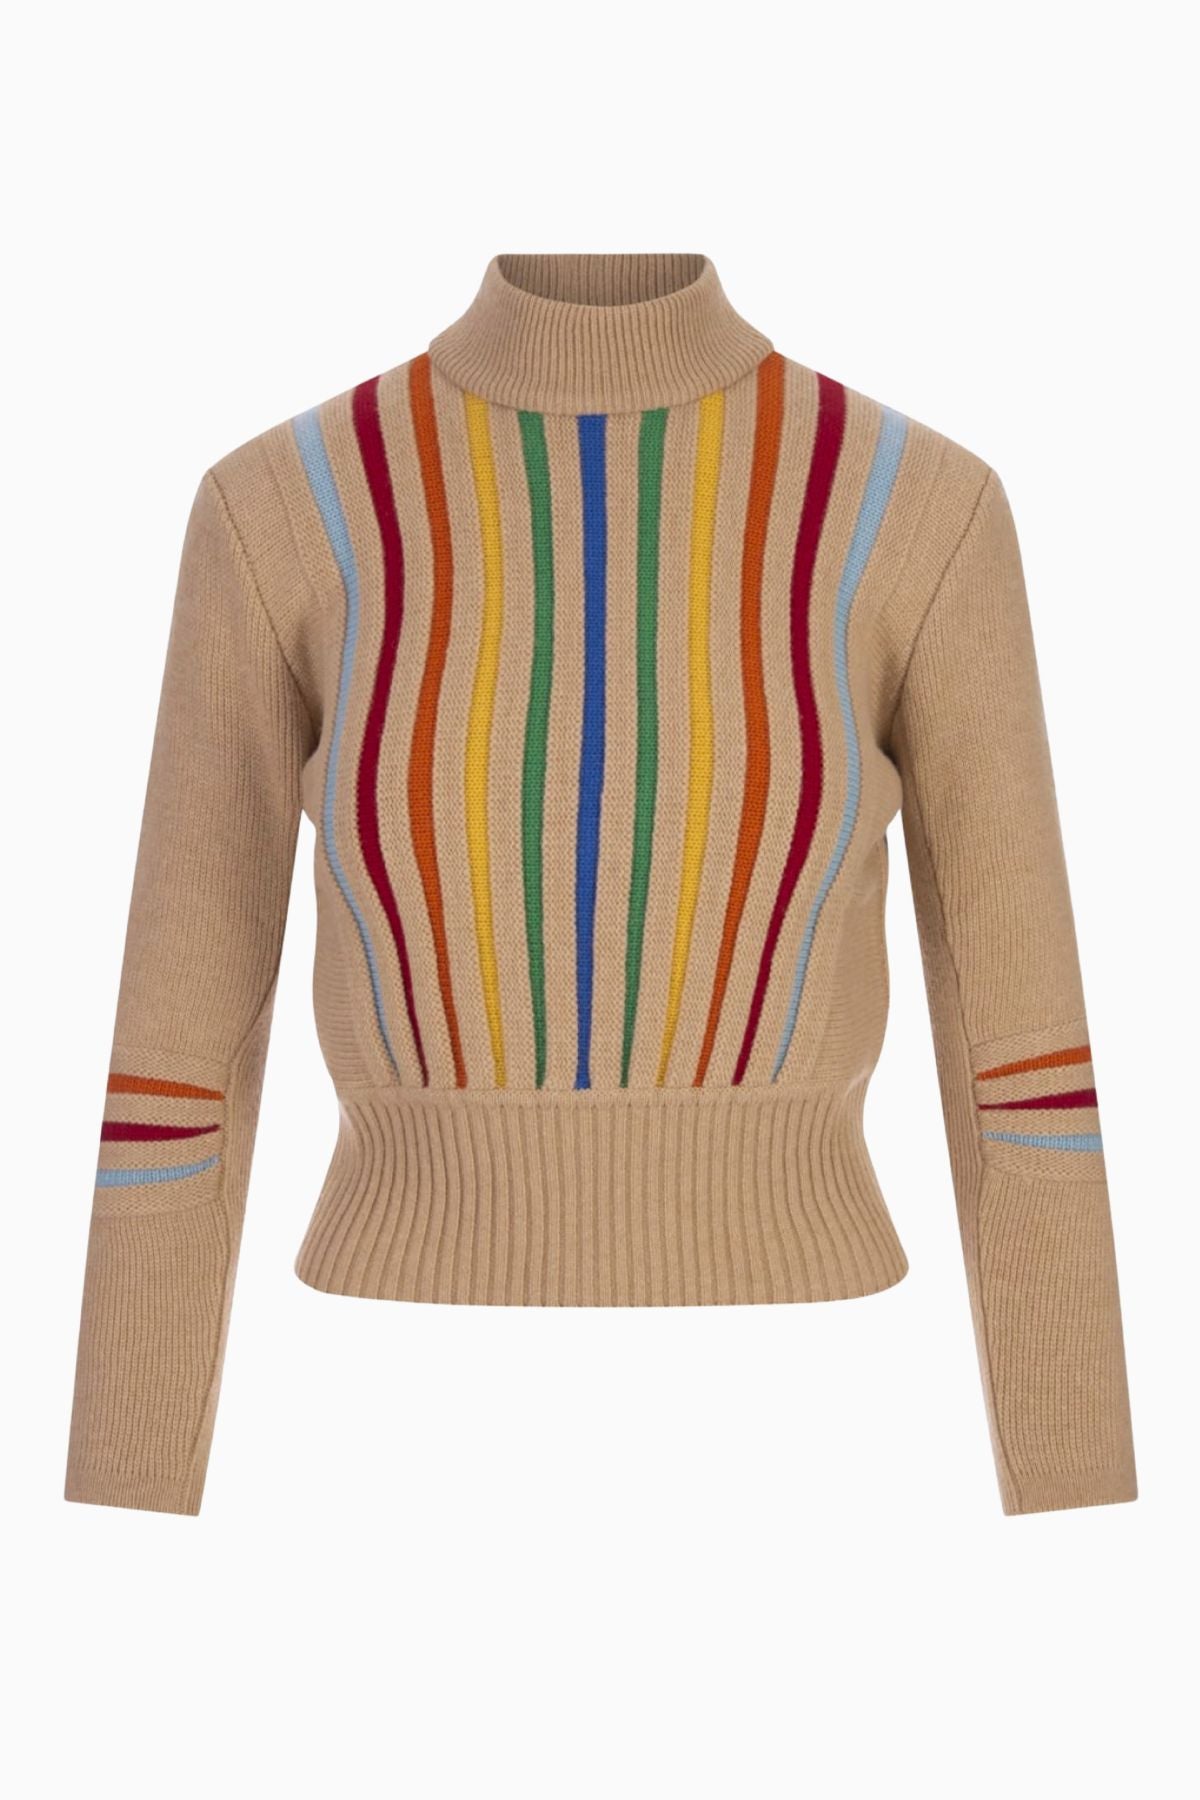 Etro Rainbow Stripe Knit - Beige